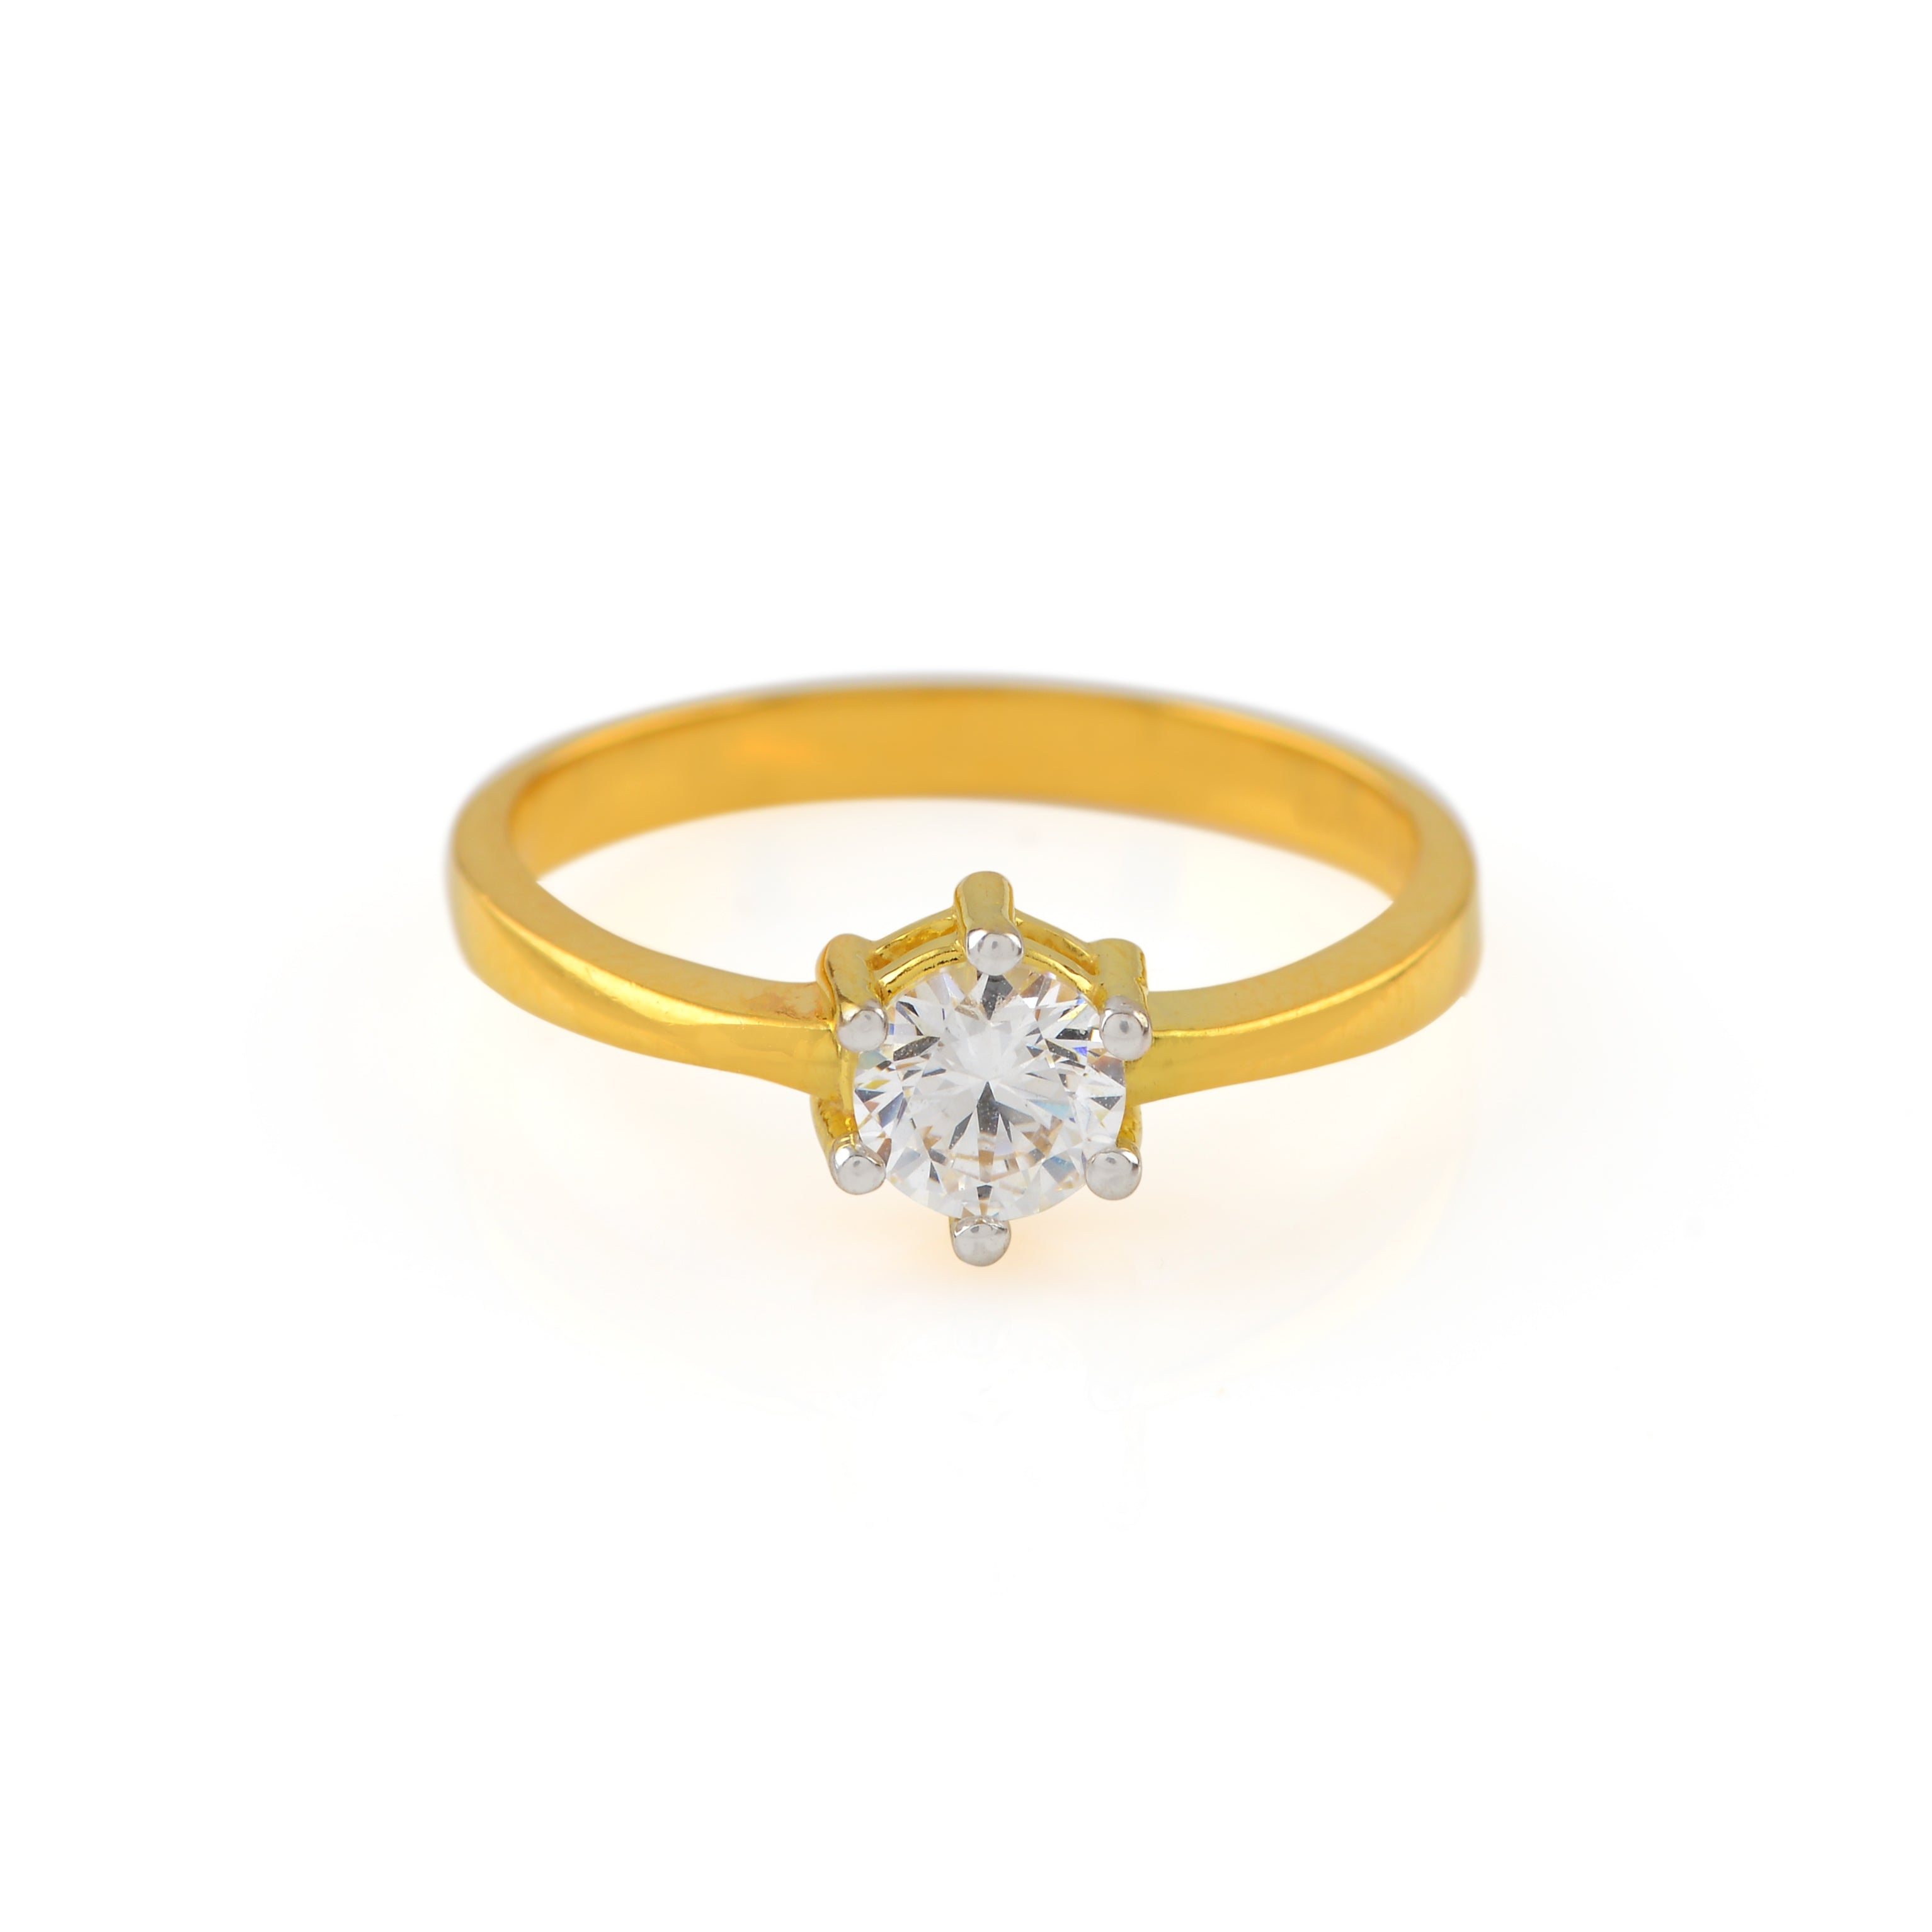 Buy AVSAR 14KT Yellow Gold Ring for Women at Amazon.in